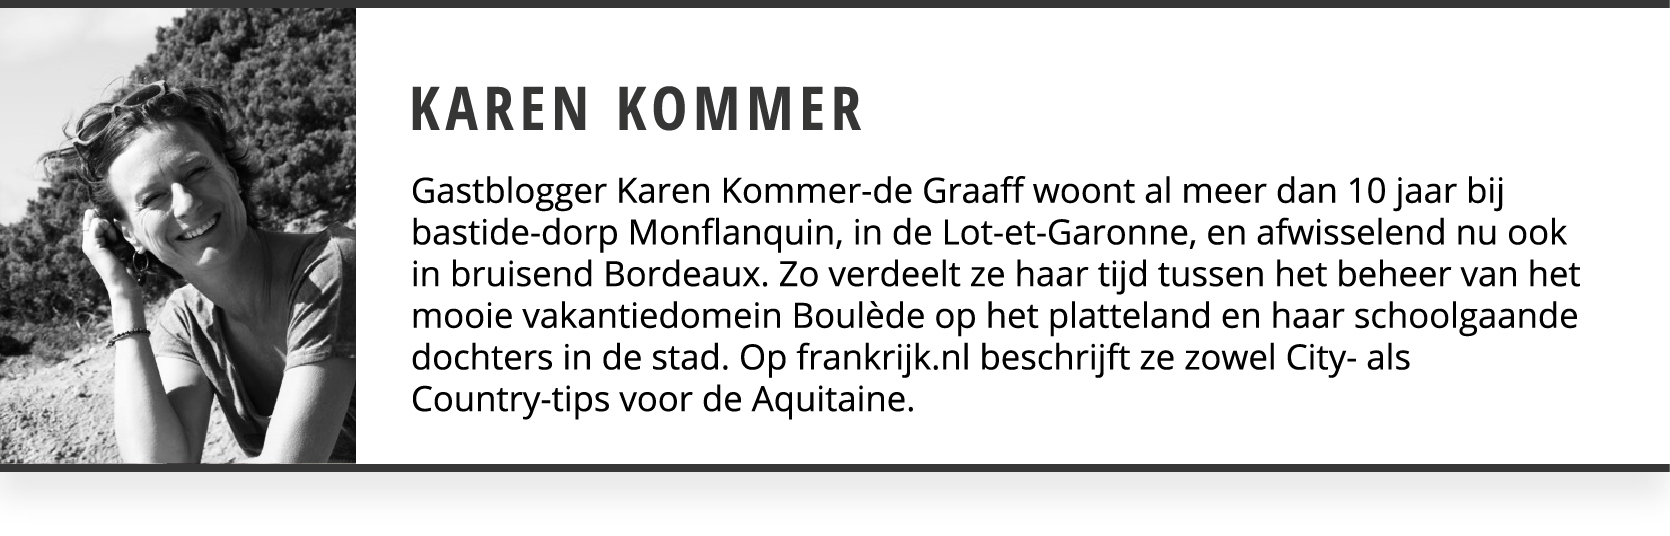 Karen Kommer Gastblogger